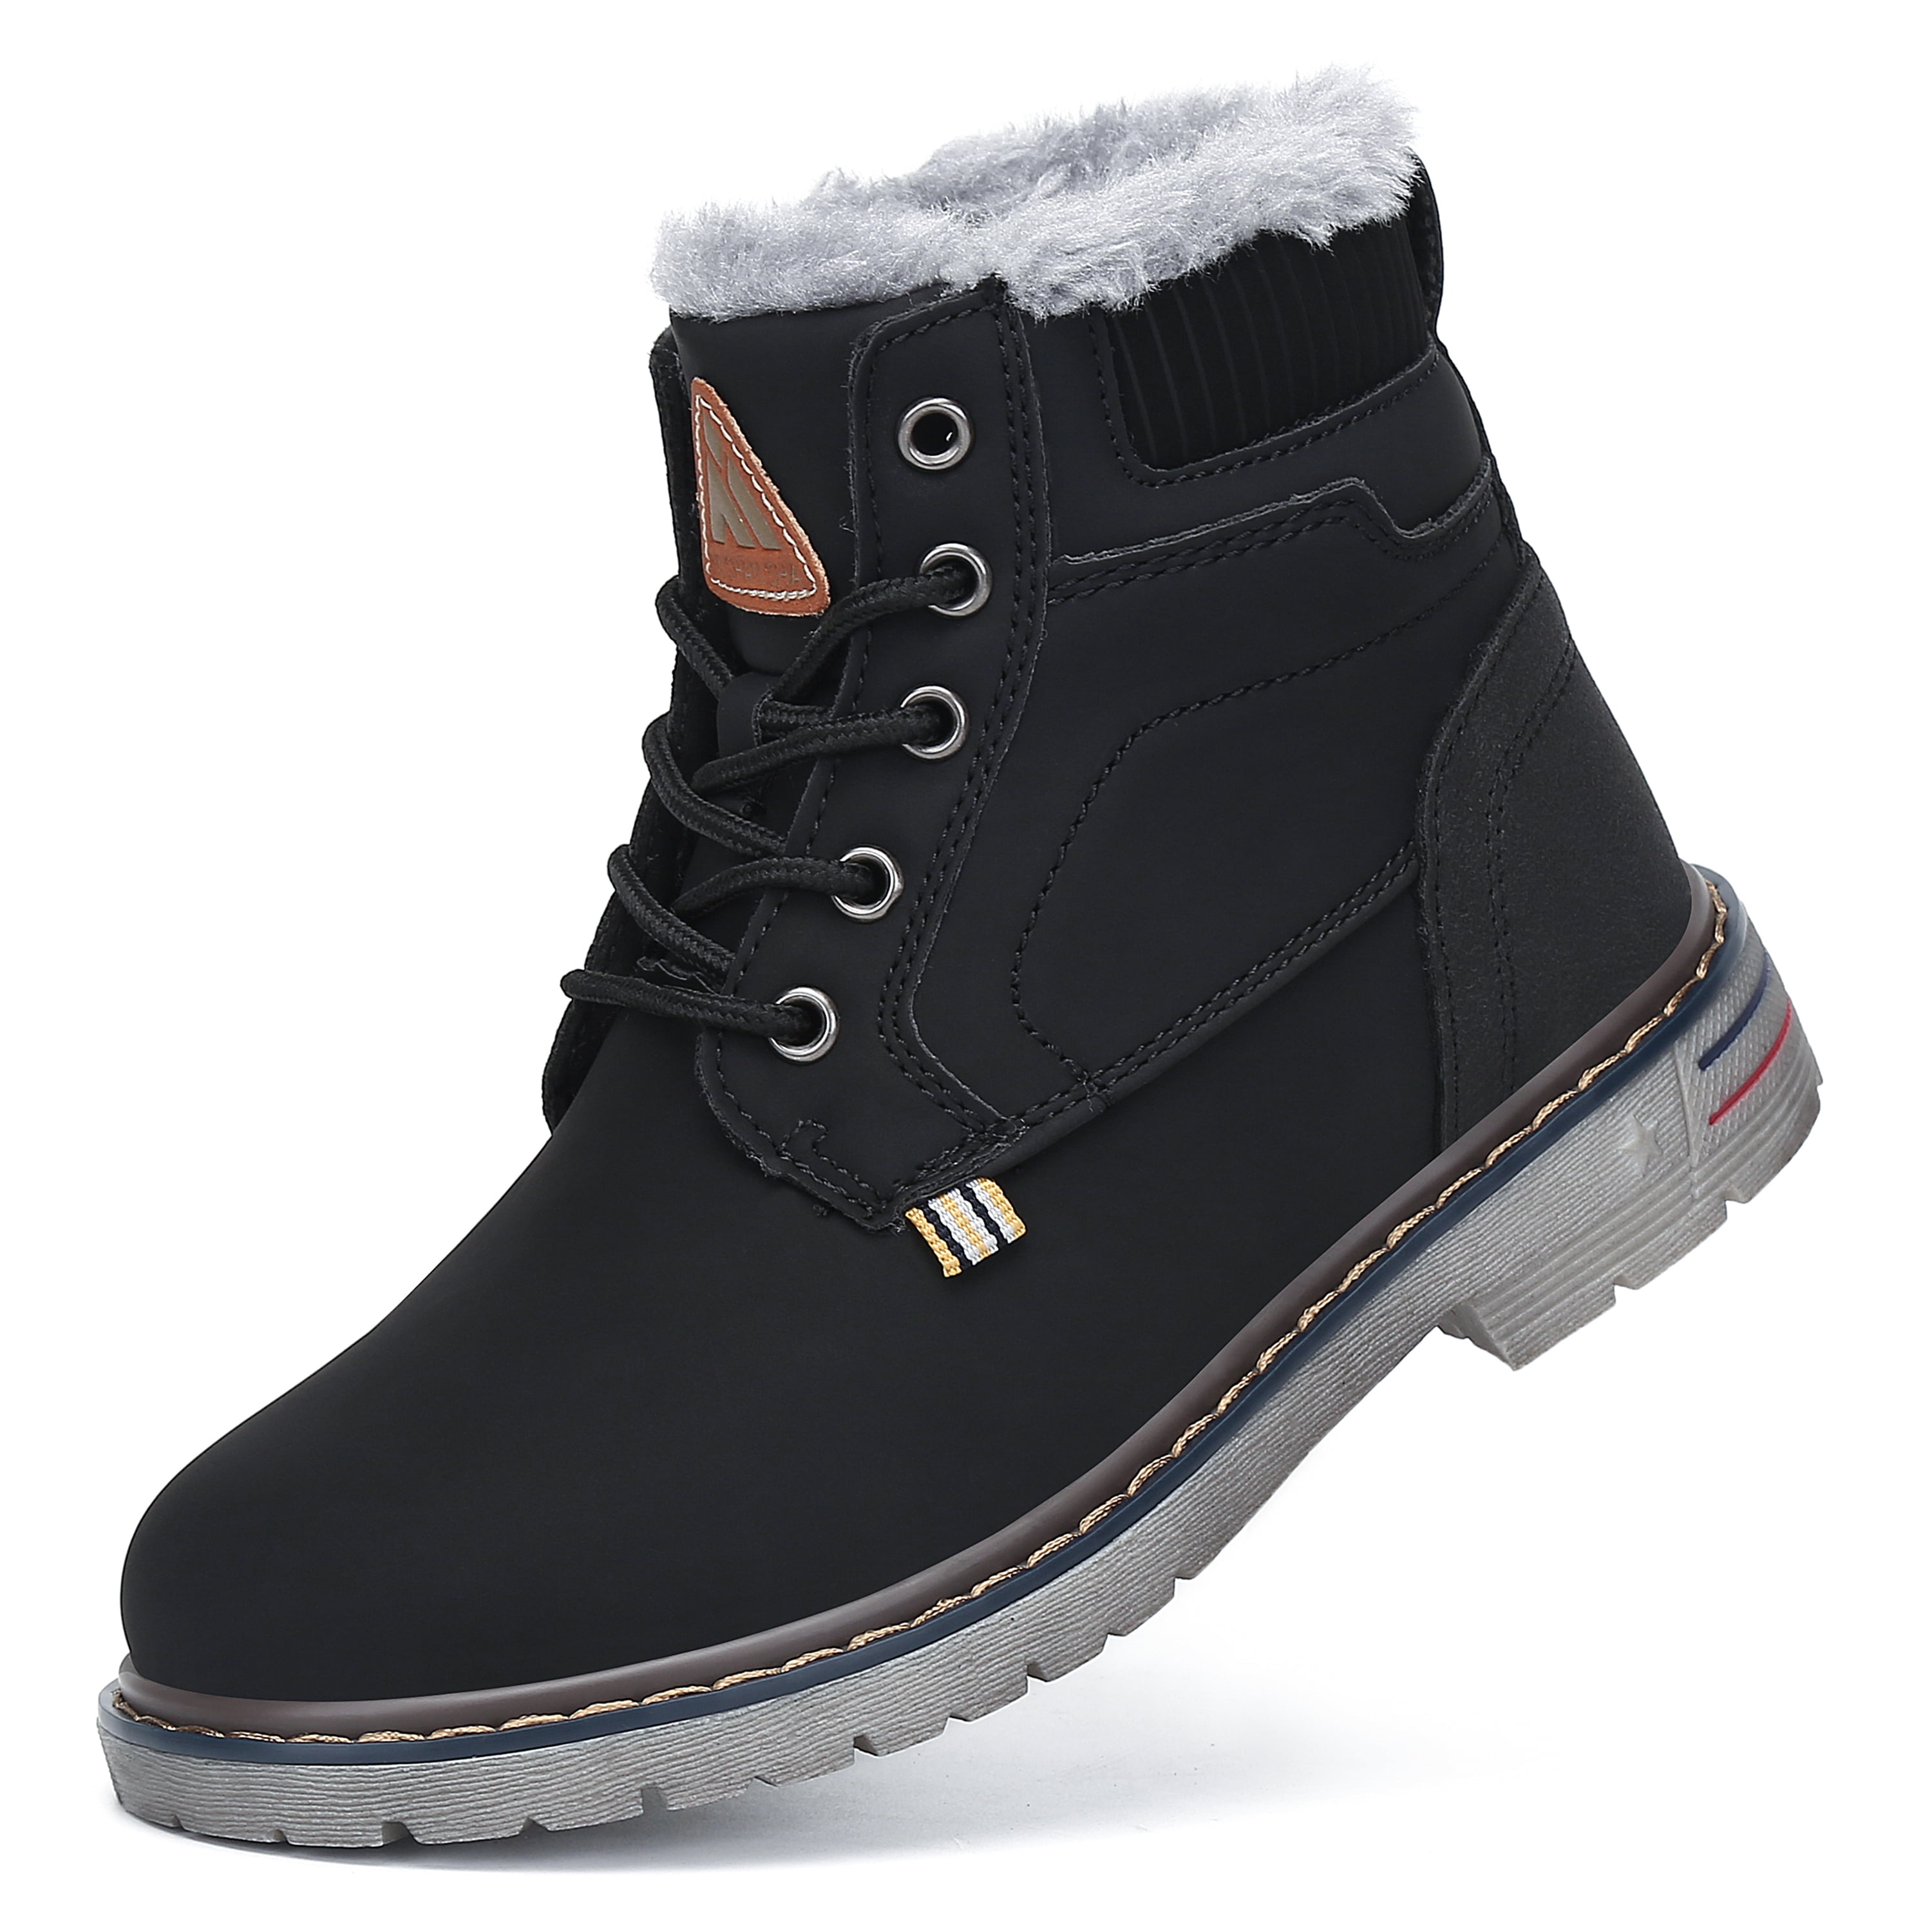 Mishansha Kids Winter Snow Boots Warm Hiking Shoes Waterproof Non Slip ...